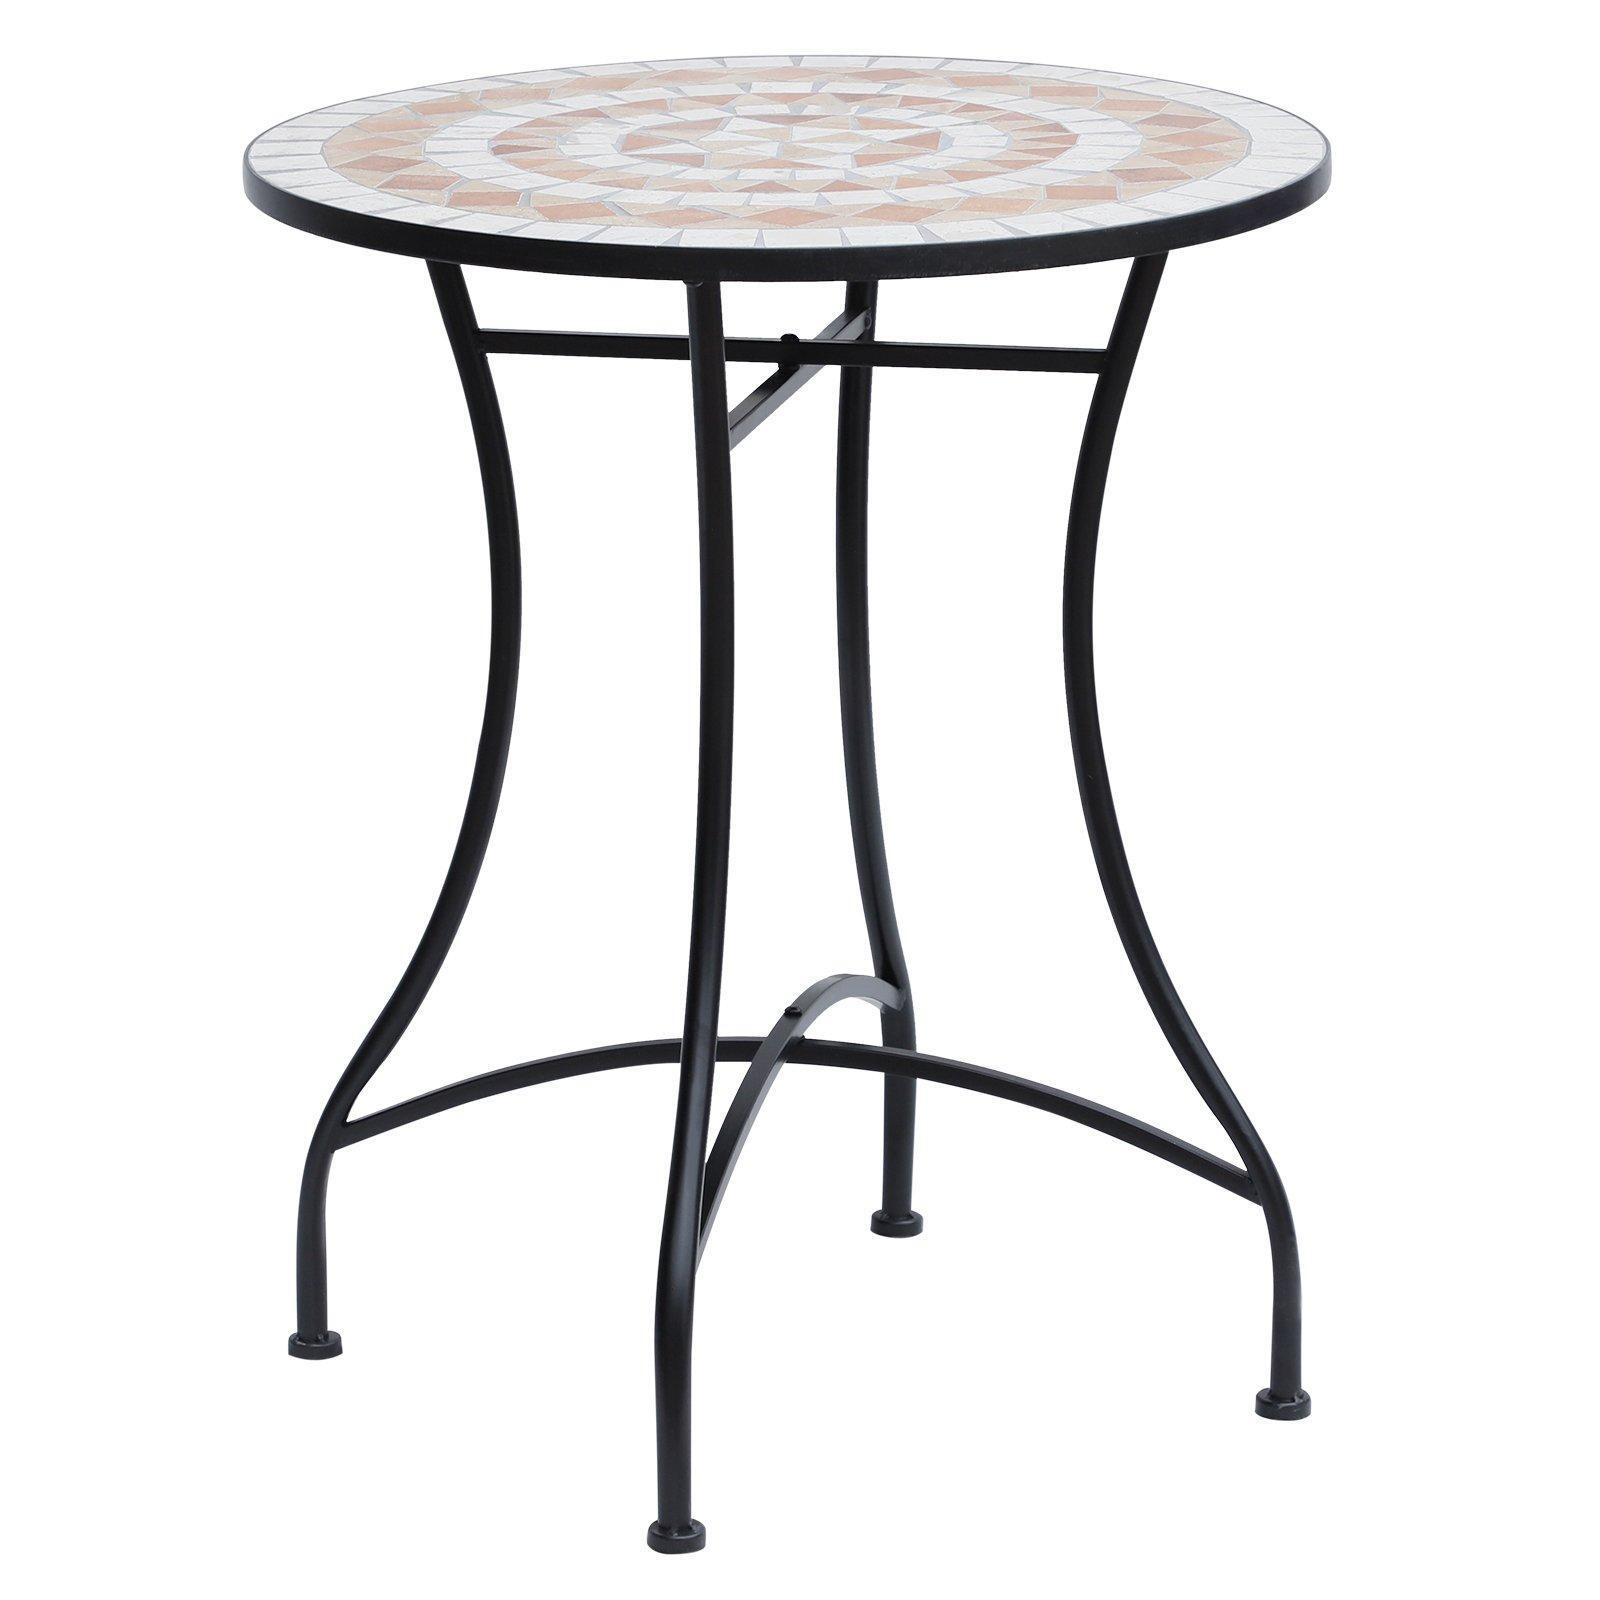 Mosaic Table Round Ceramic Bistro Garden Furniture Side Bar Table - image 1